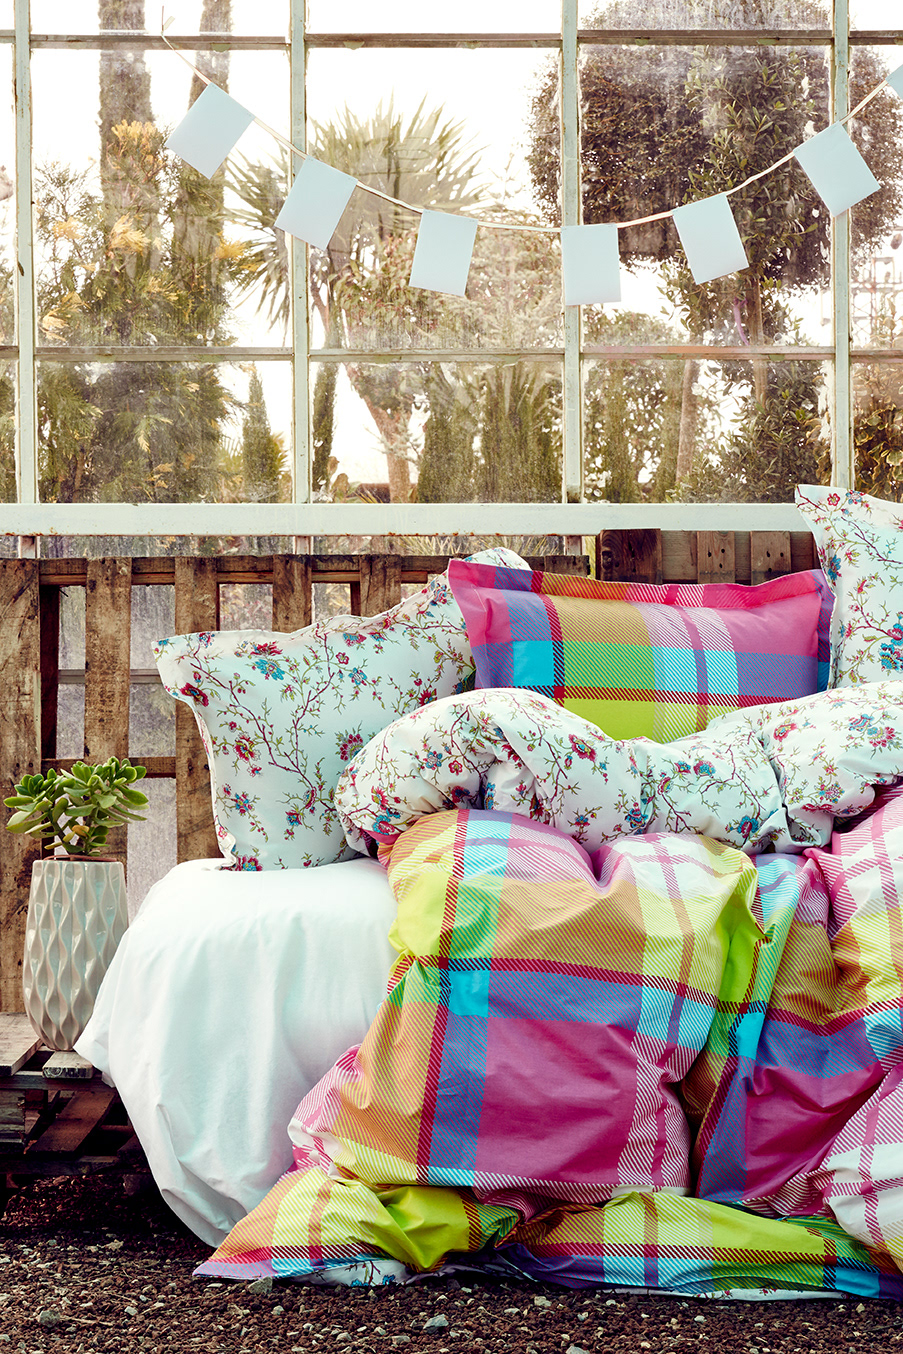 bed bed cover model women yorgan home home textile karaca summer decoration still life Life Style Nature plants nevresim